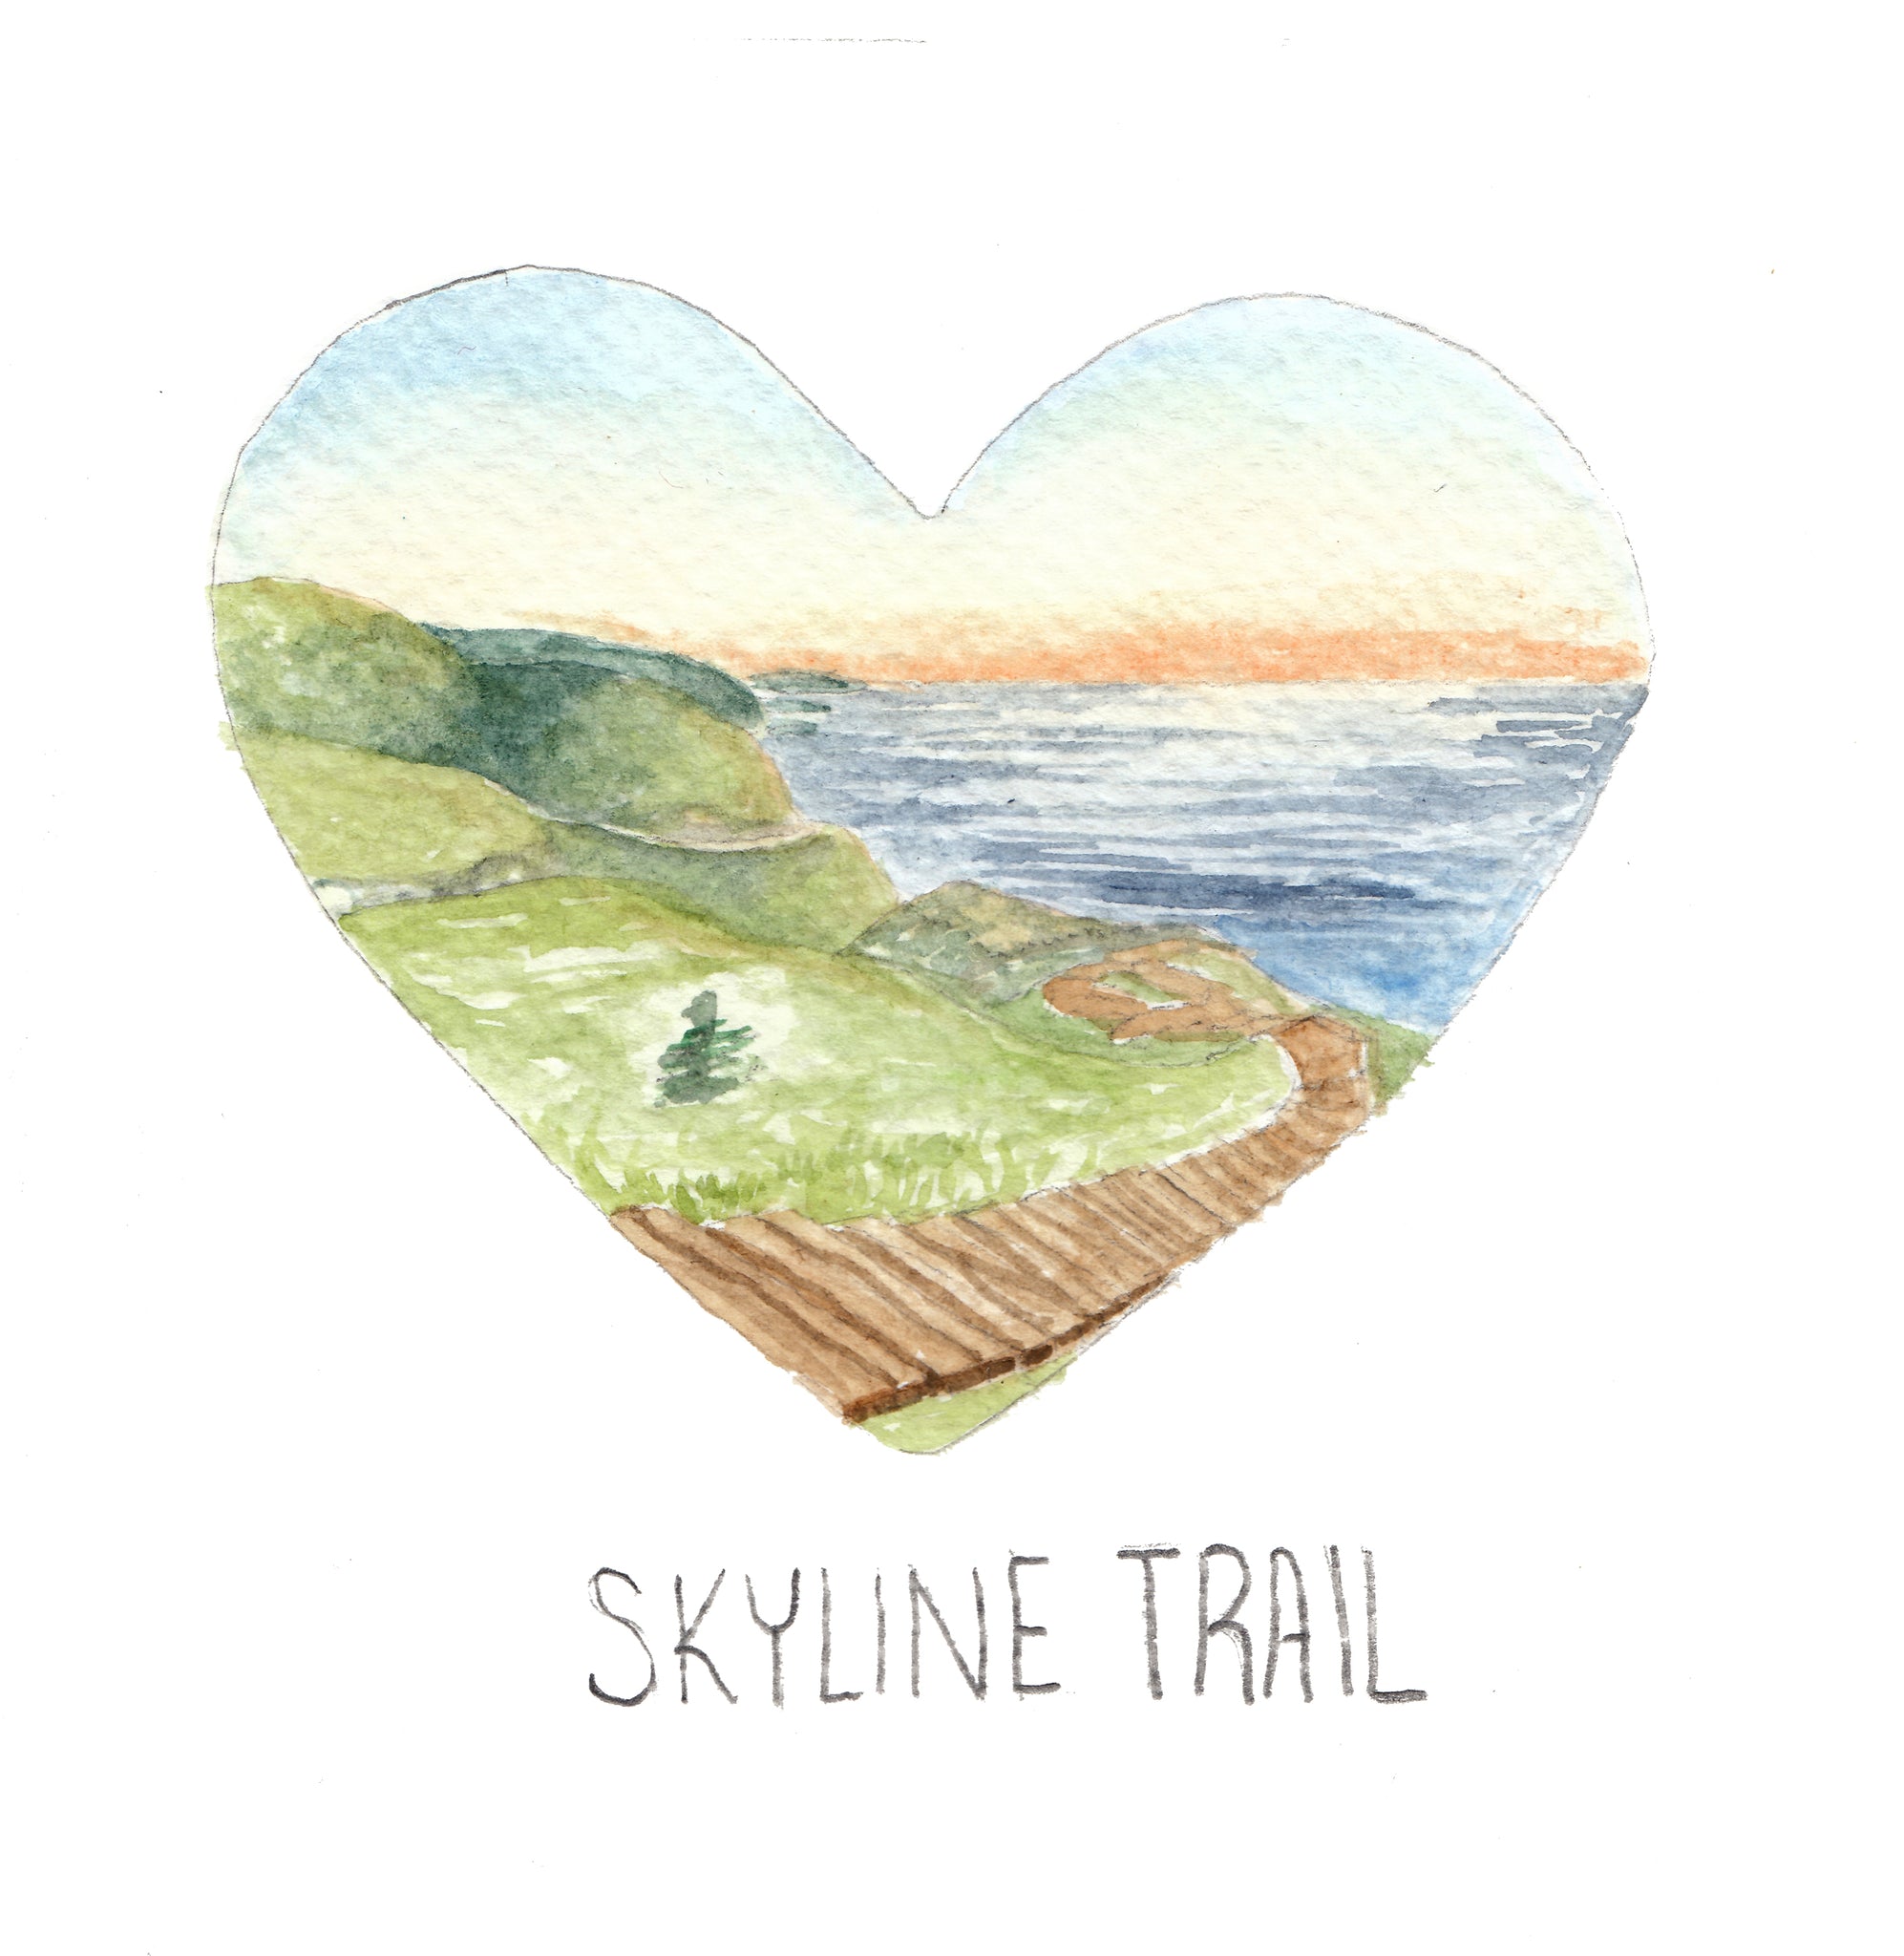 Skyline Trail - Print